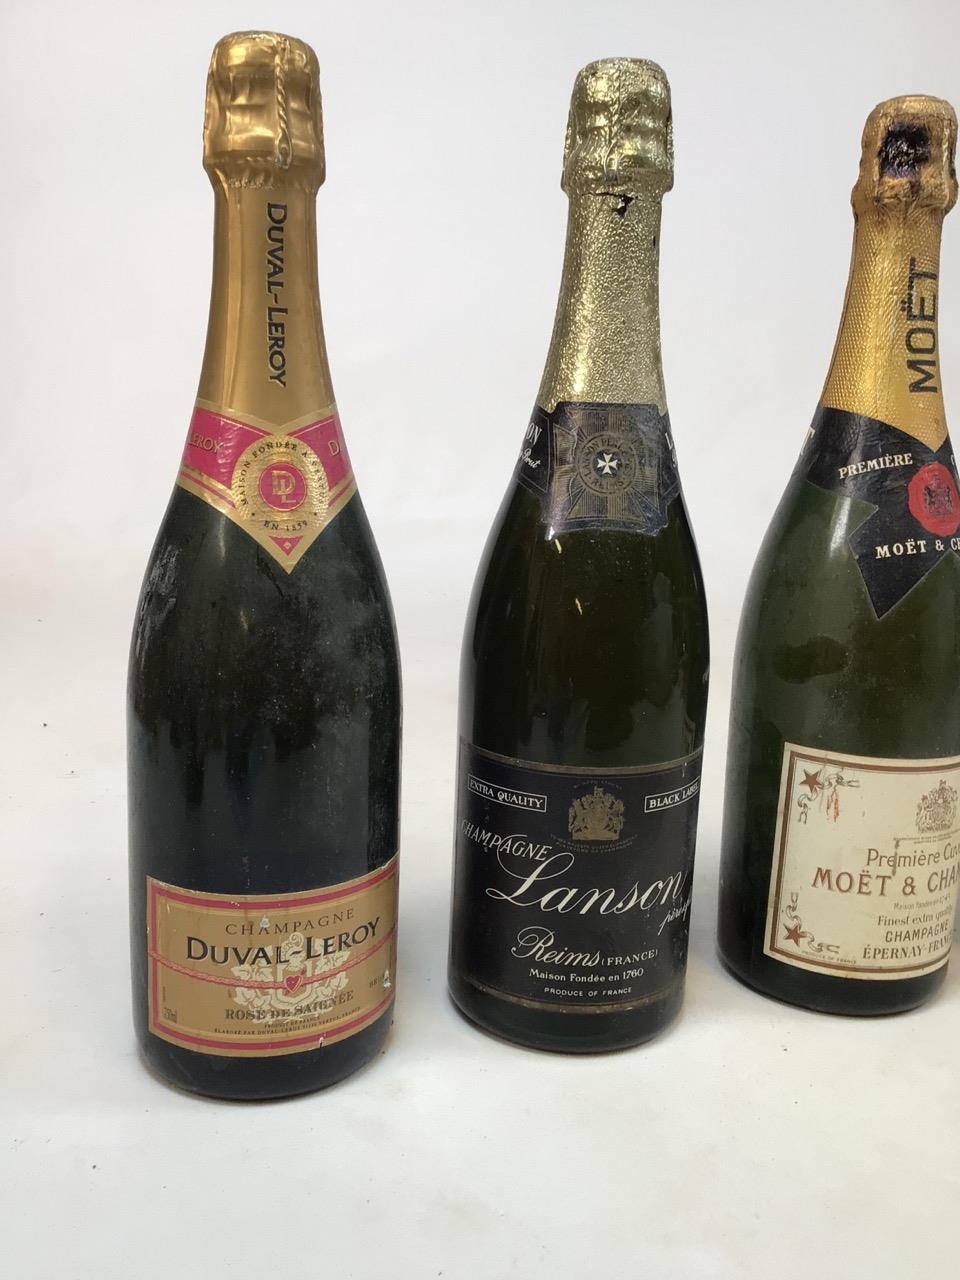 Three bottle of Moet & Chandon Champagne together with a bottle of Landon Black Label Champagne - Image 3 of 3